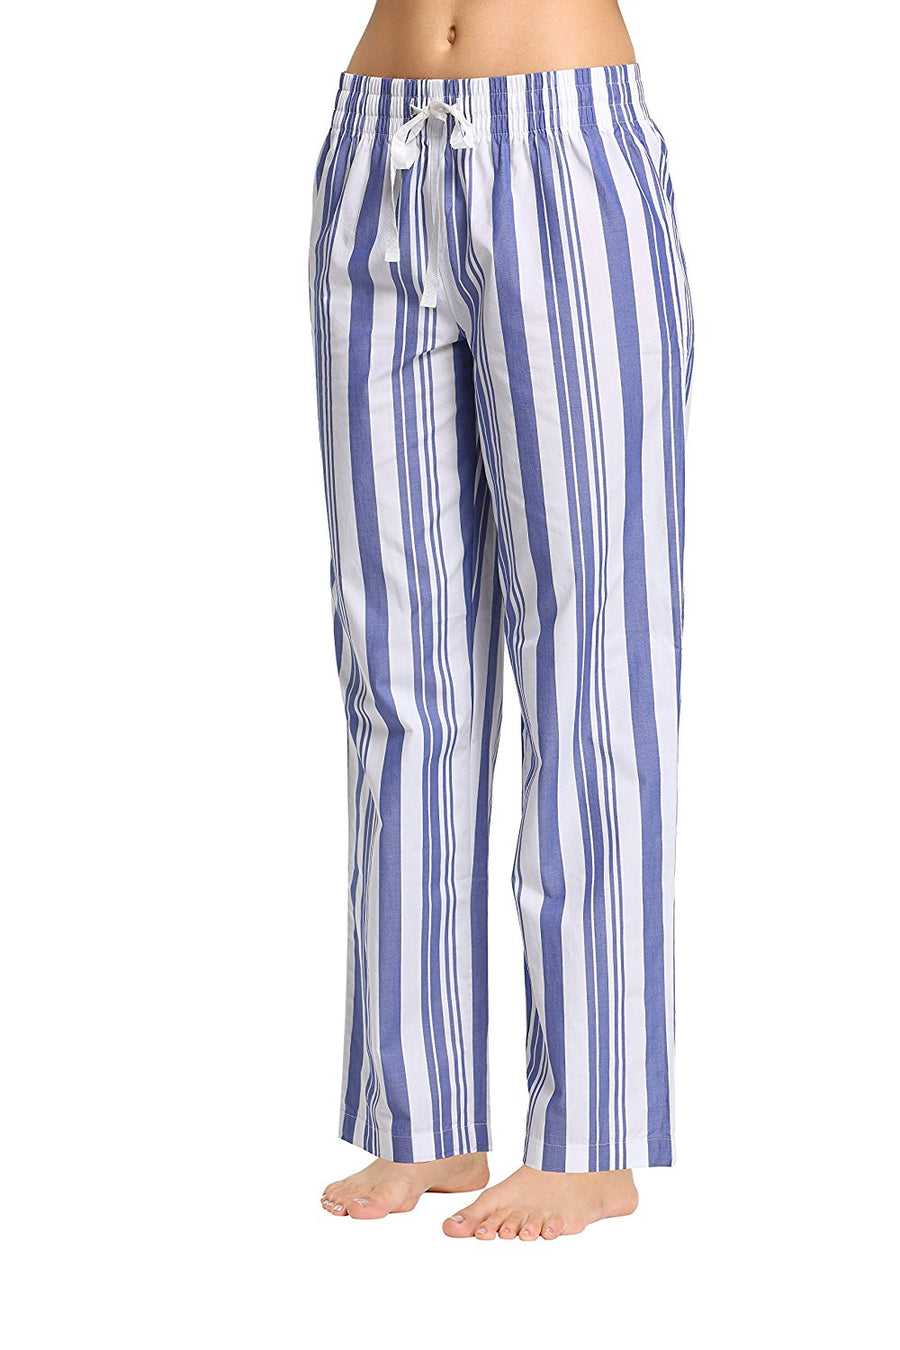 Children's Teens Boys Girls 100% Cotton Lounge Pants Pyjama Bottoms  ages 1-16 | eBay